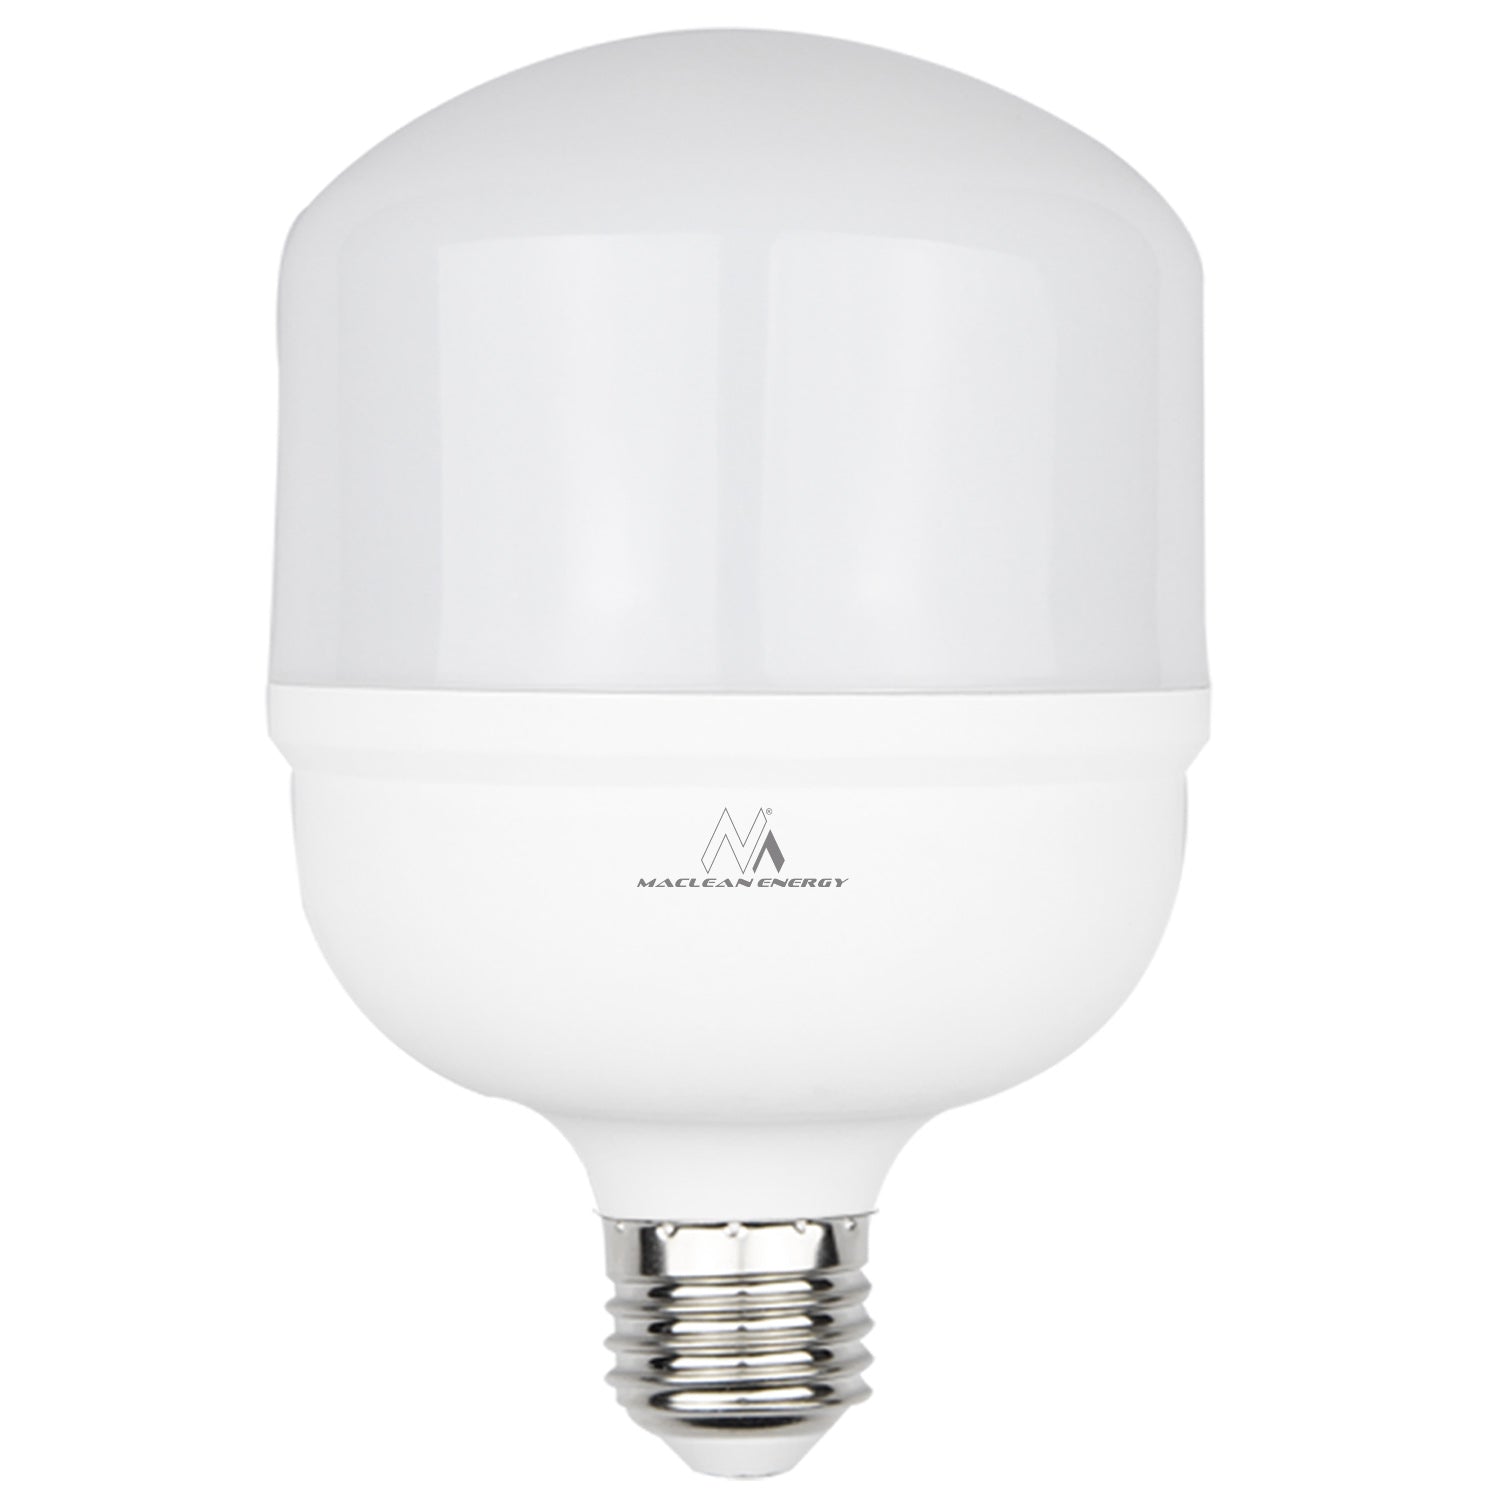 LED light bulb E27 200 degree light angle lamp lamp incandescent lamp –  Euroelectronics EU